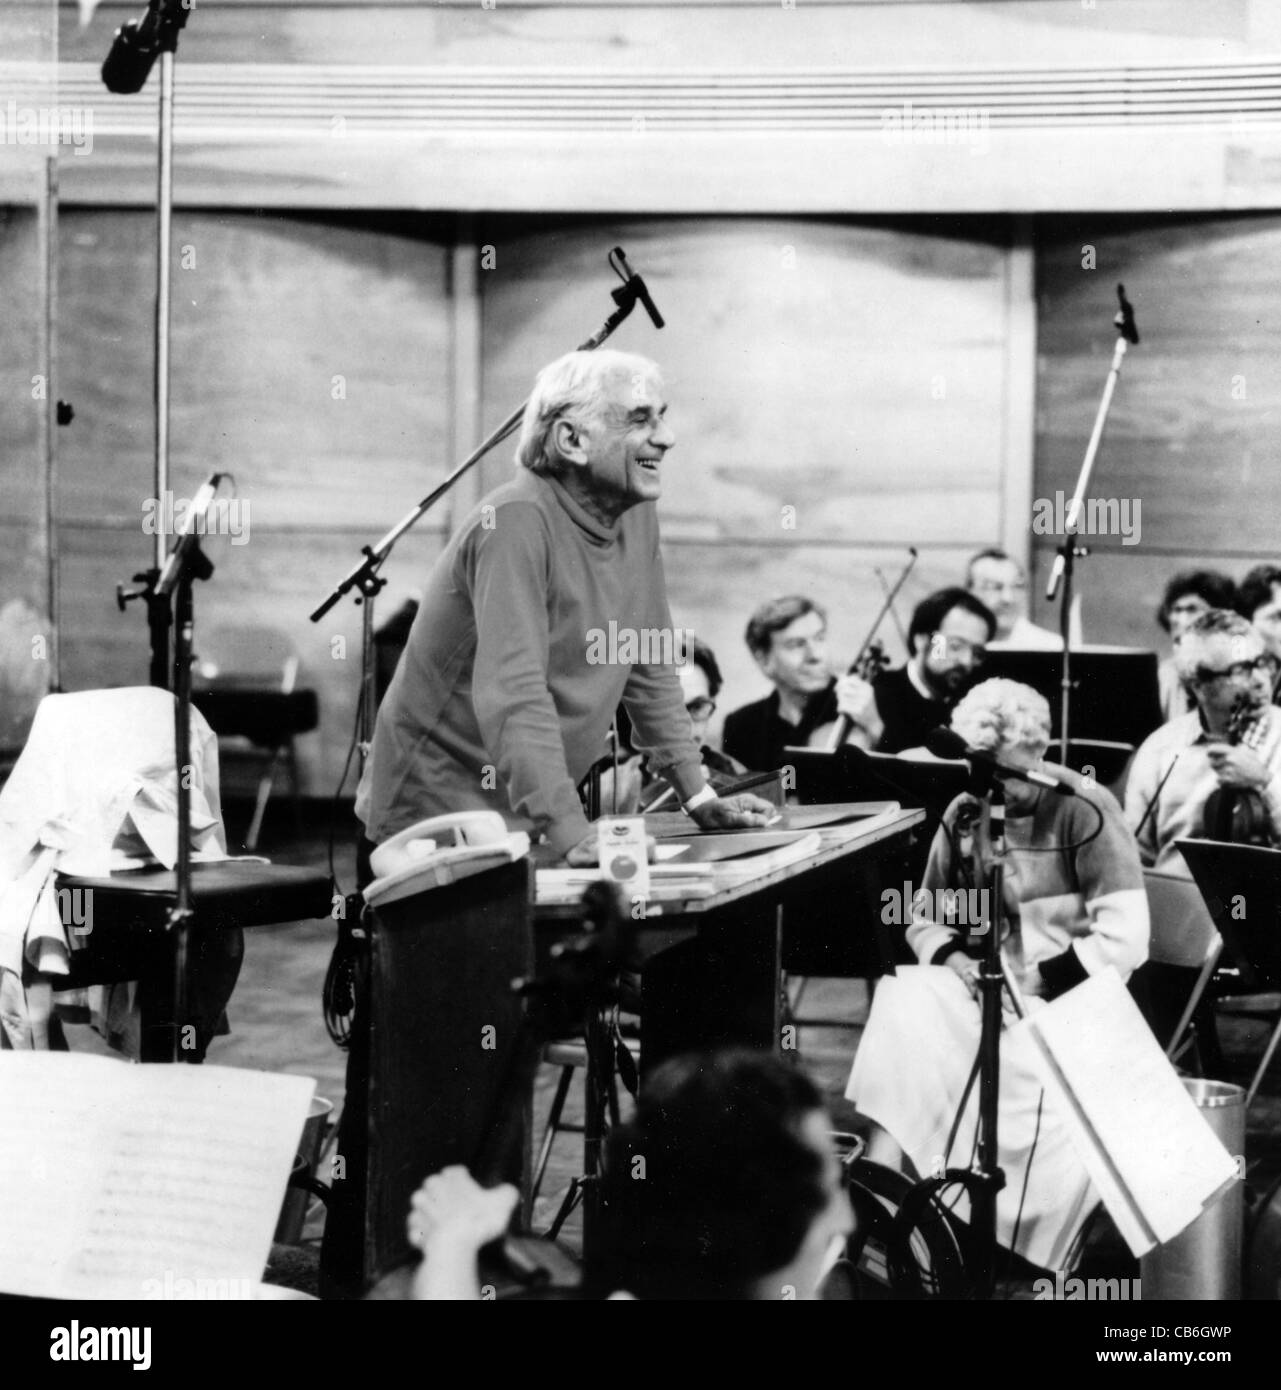 LEONARD Bernstein (1918-1990) foto promocional de American conductor Foto de stock